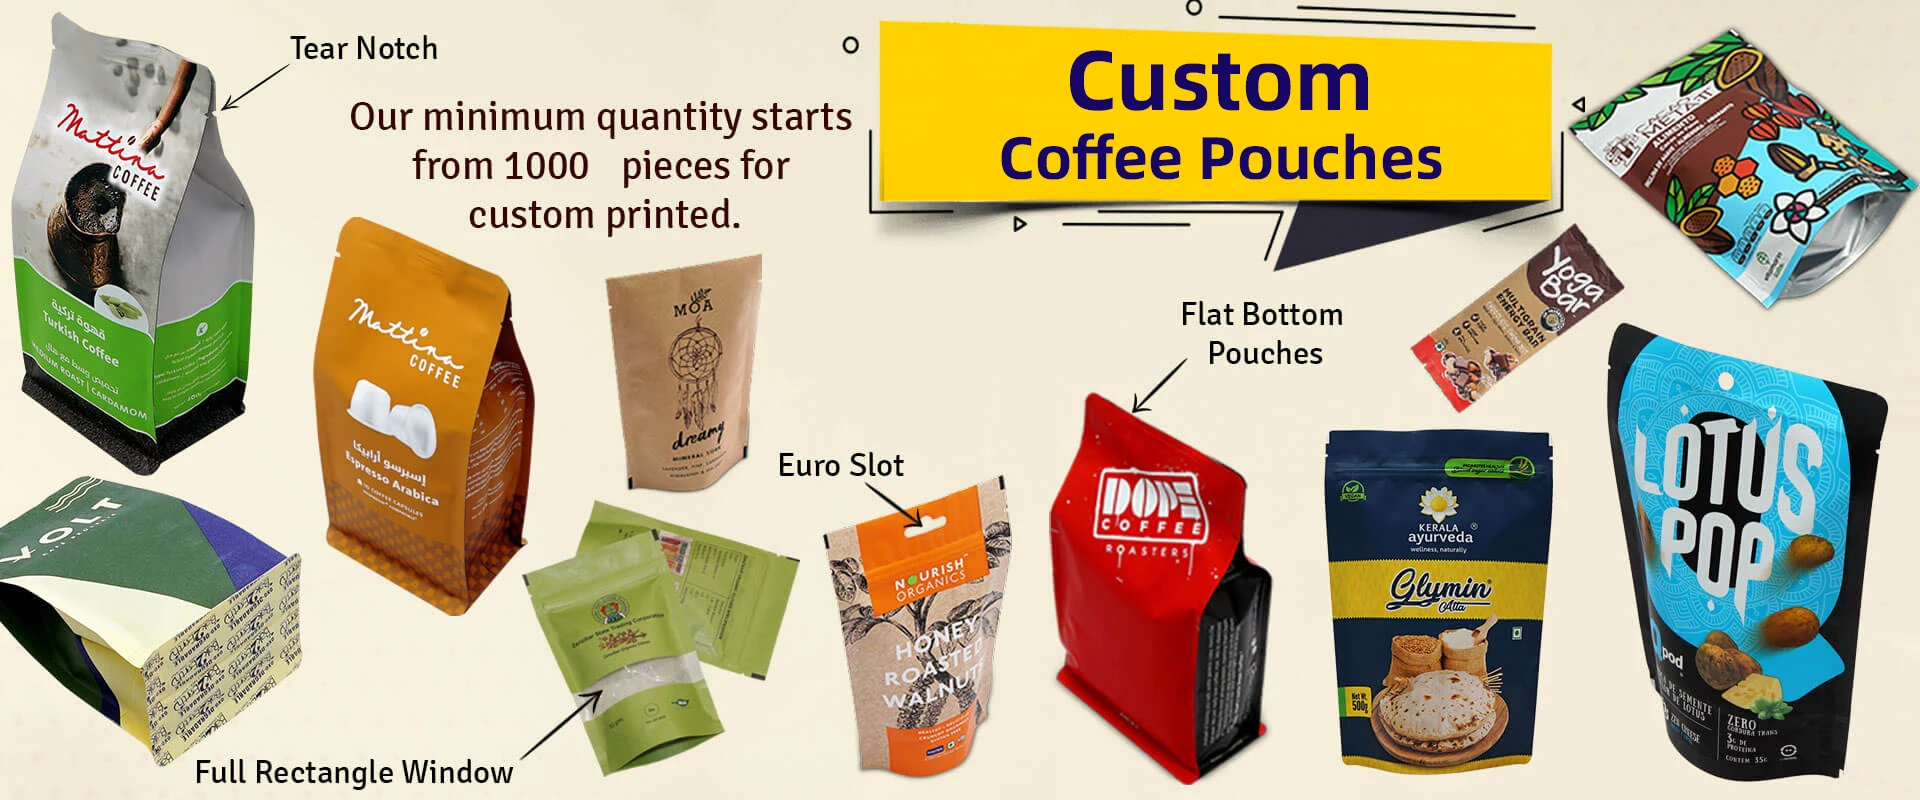 Custom Printed Stand up Coffee Pouch 8oz 12oz 16oz 100g 250g 500g1kg Tear Notch Zipper Squared Flat Bottom Coffee Bag with Valve